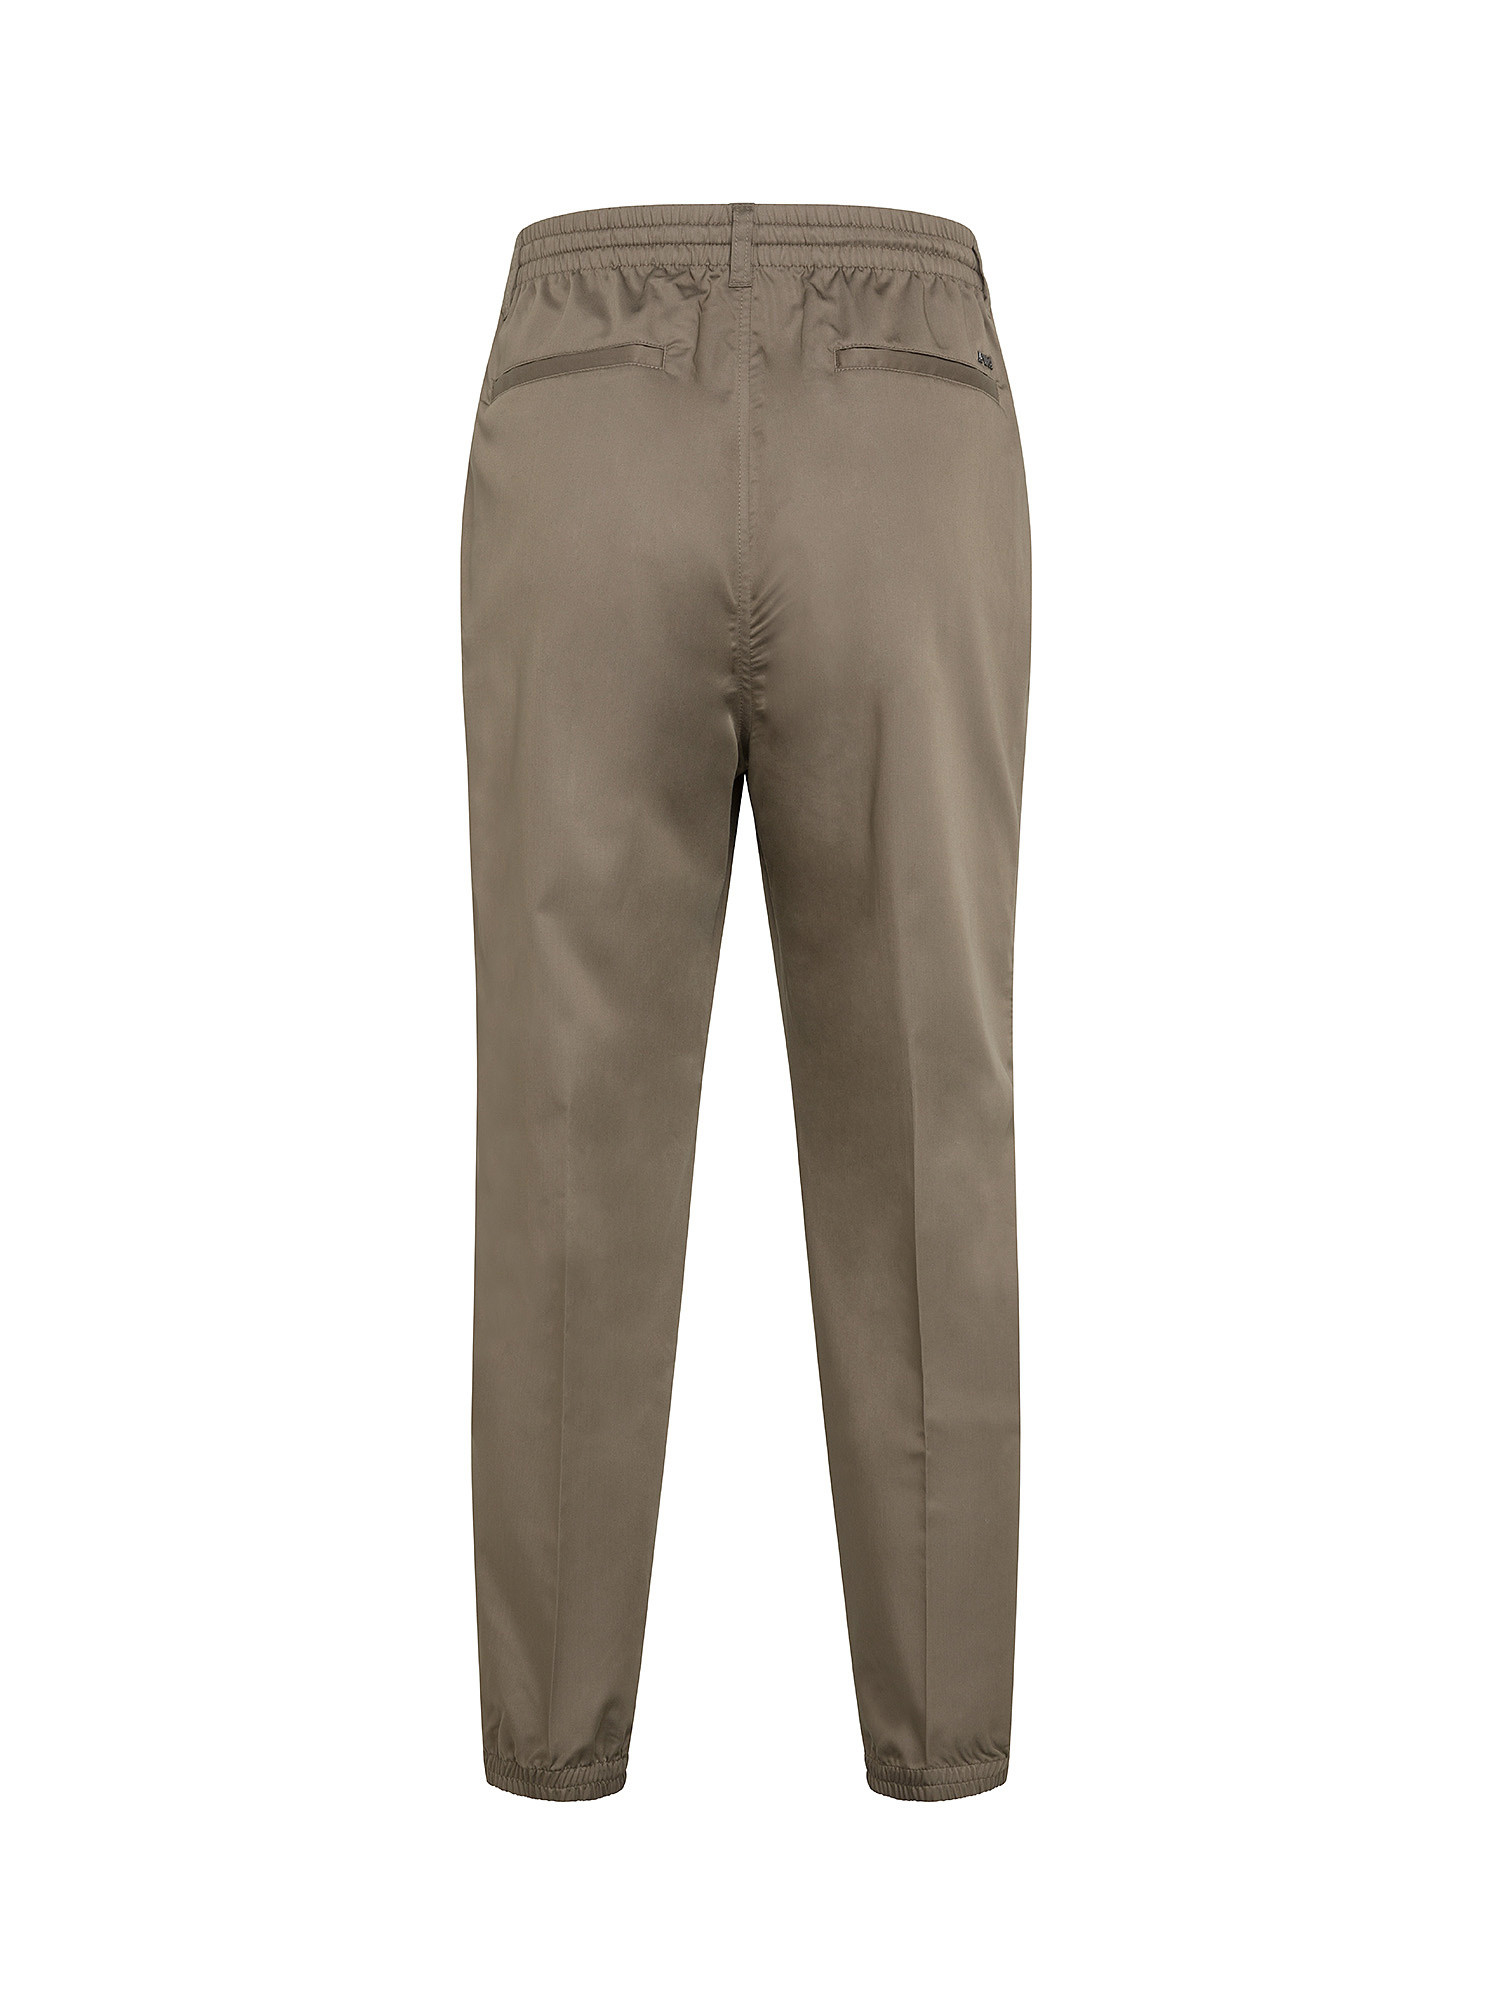 Emporio Armani - Pantaloni con coulisse, Beige scuro, large image number 1